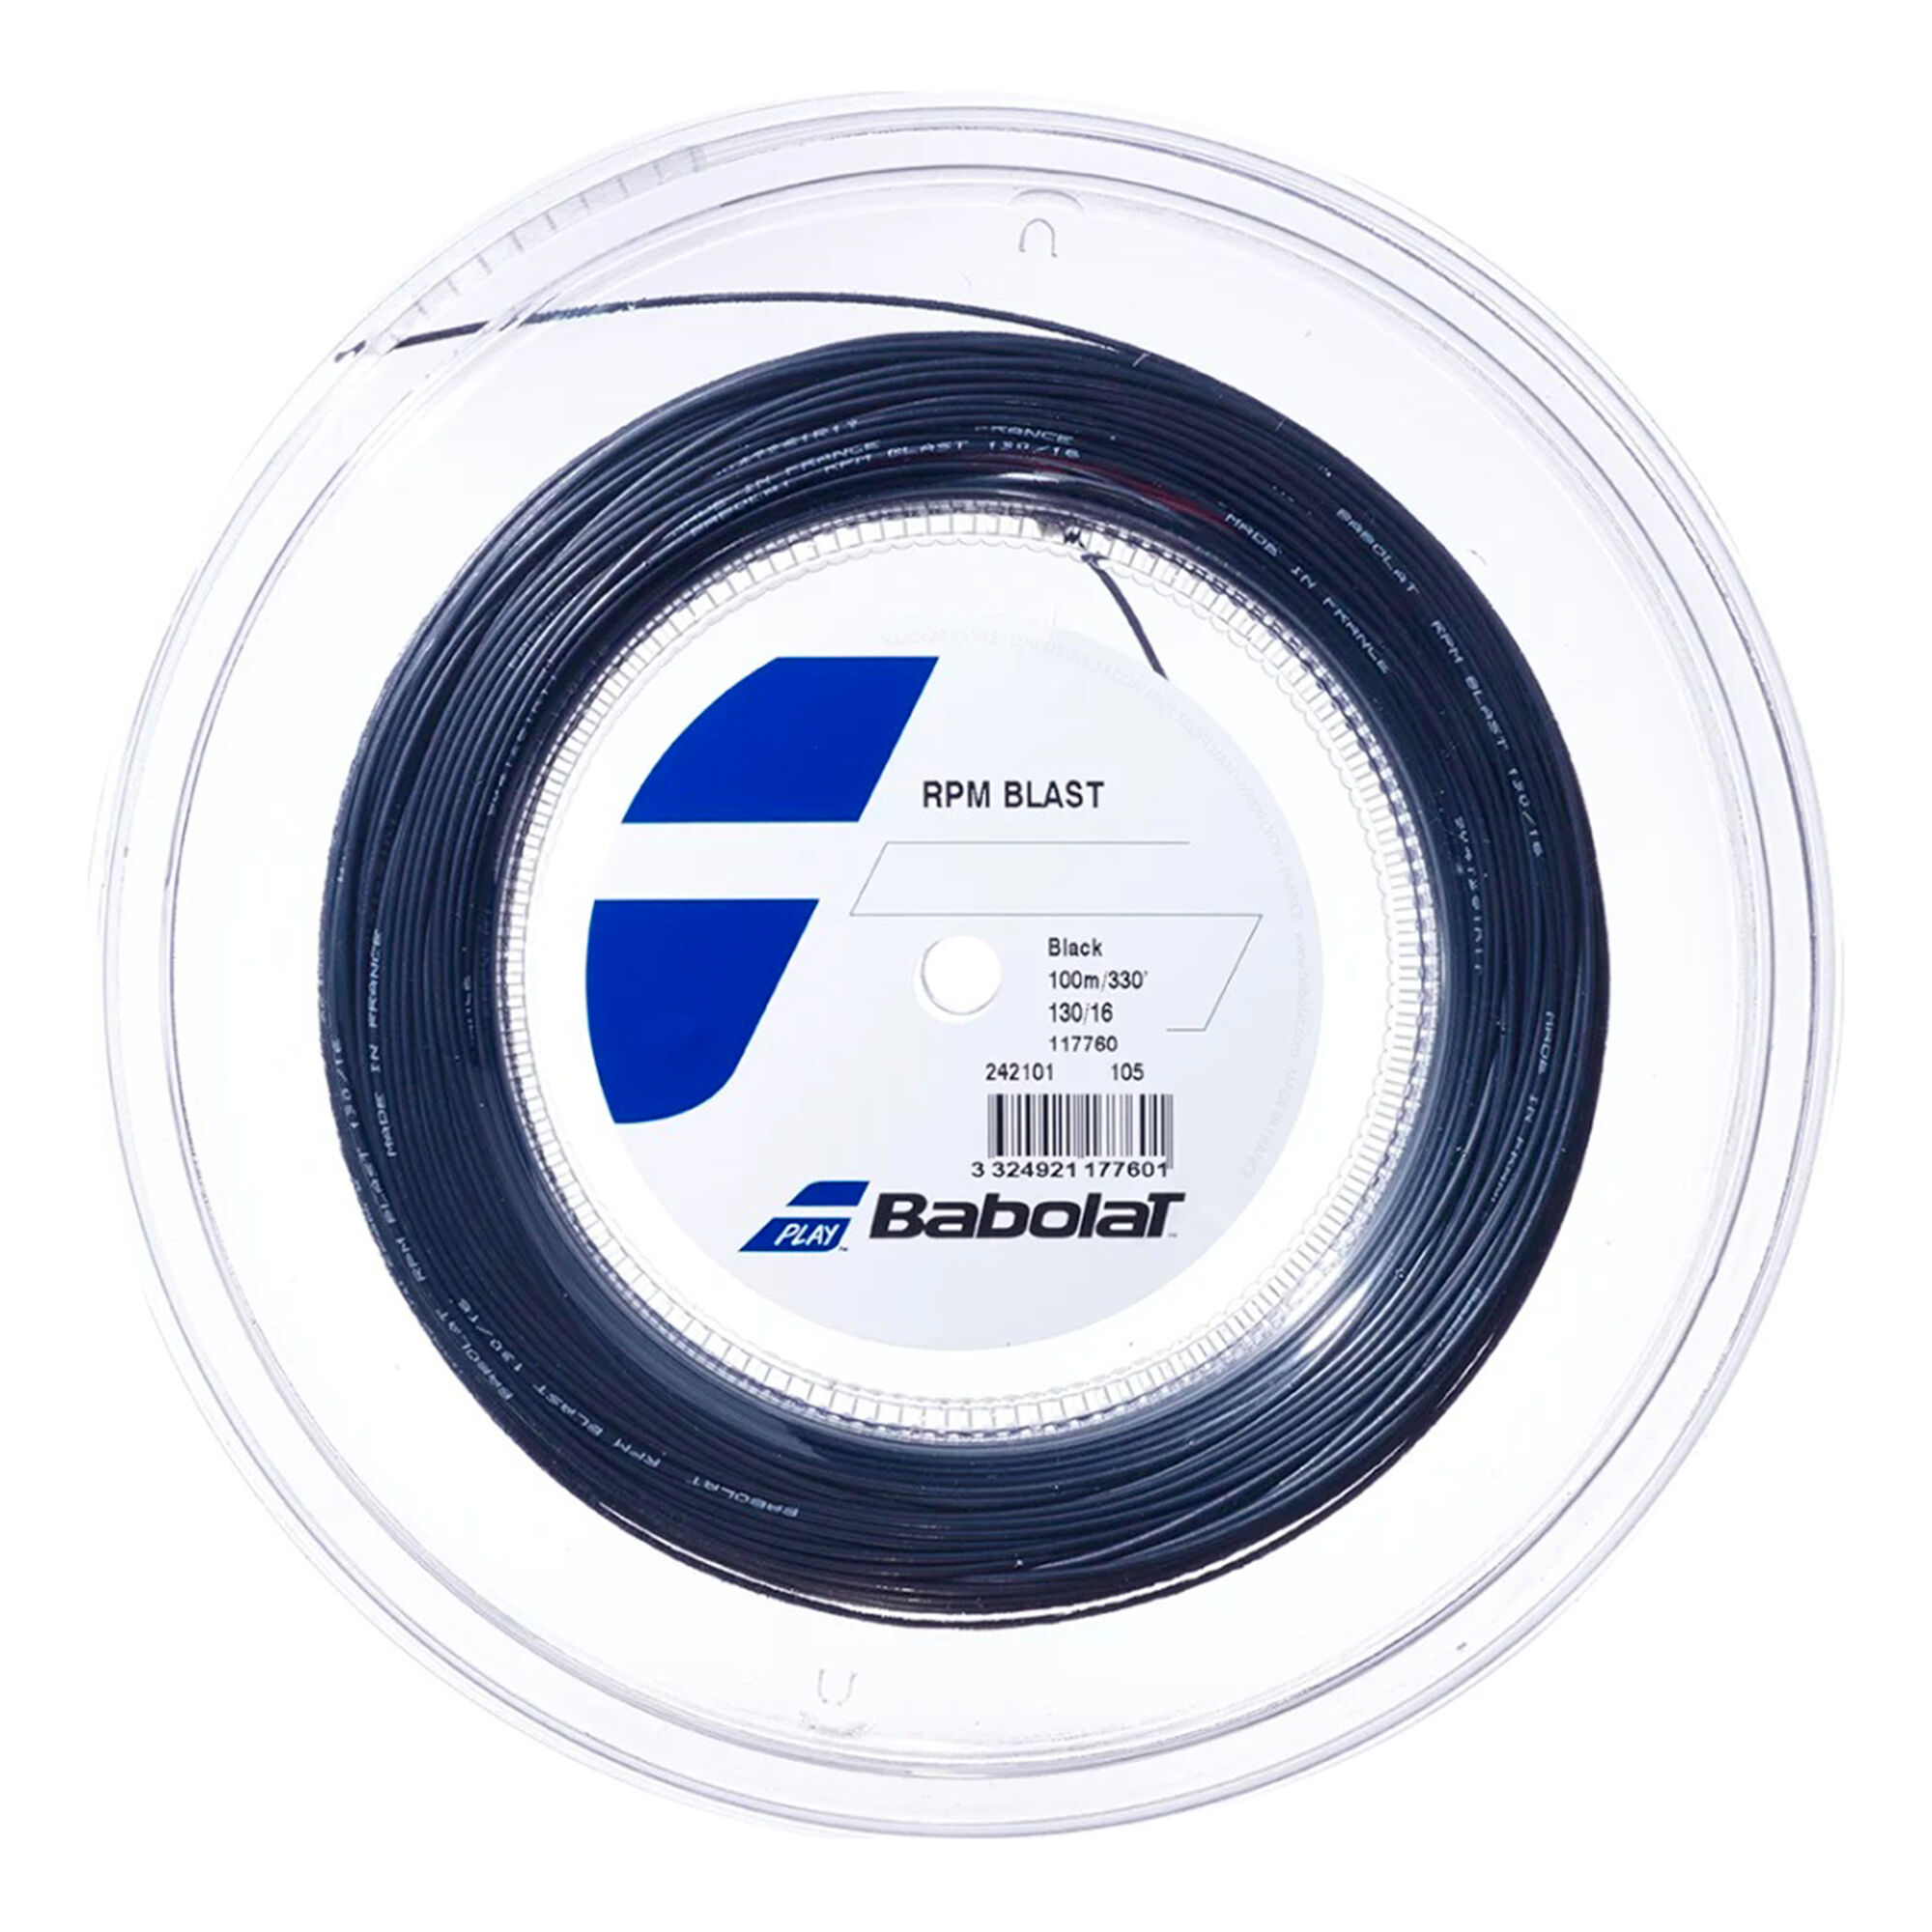 Buy Babolat RPM Blast String Reel 100m Black online